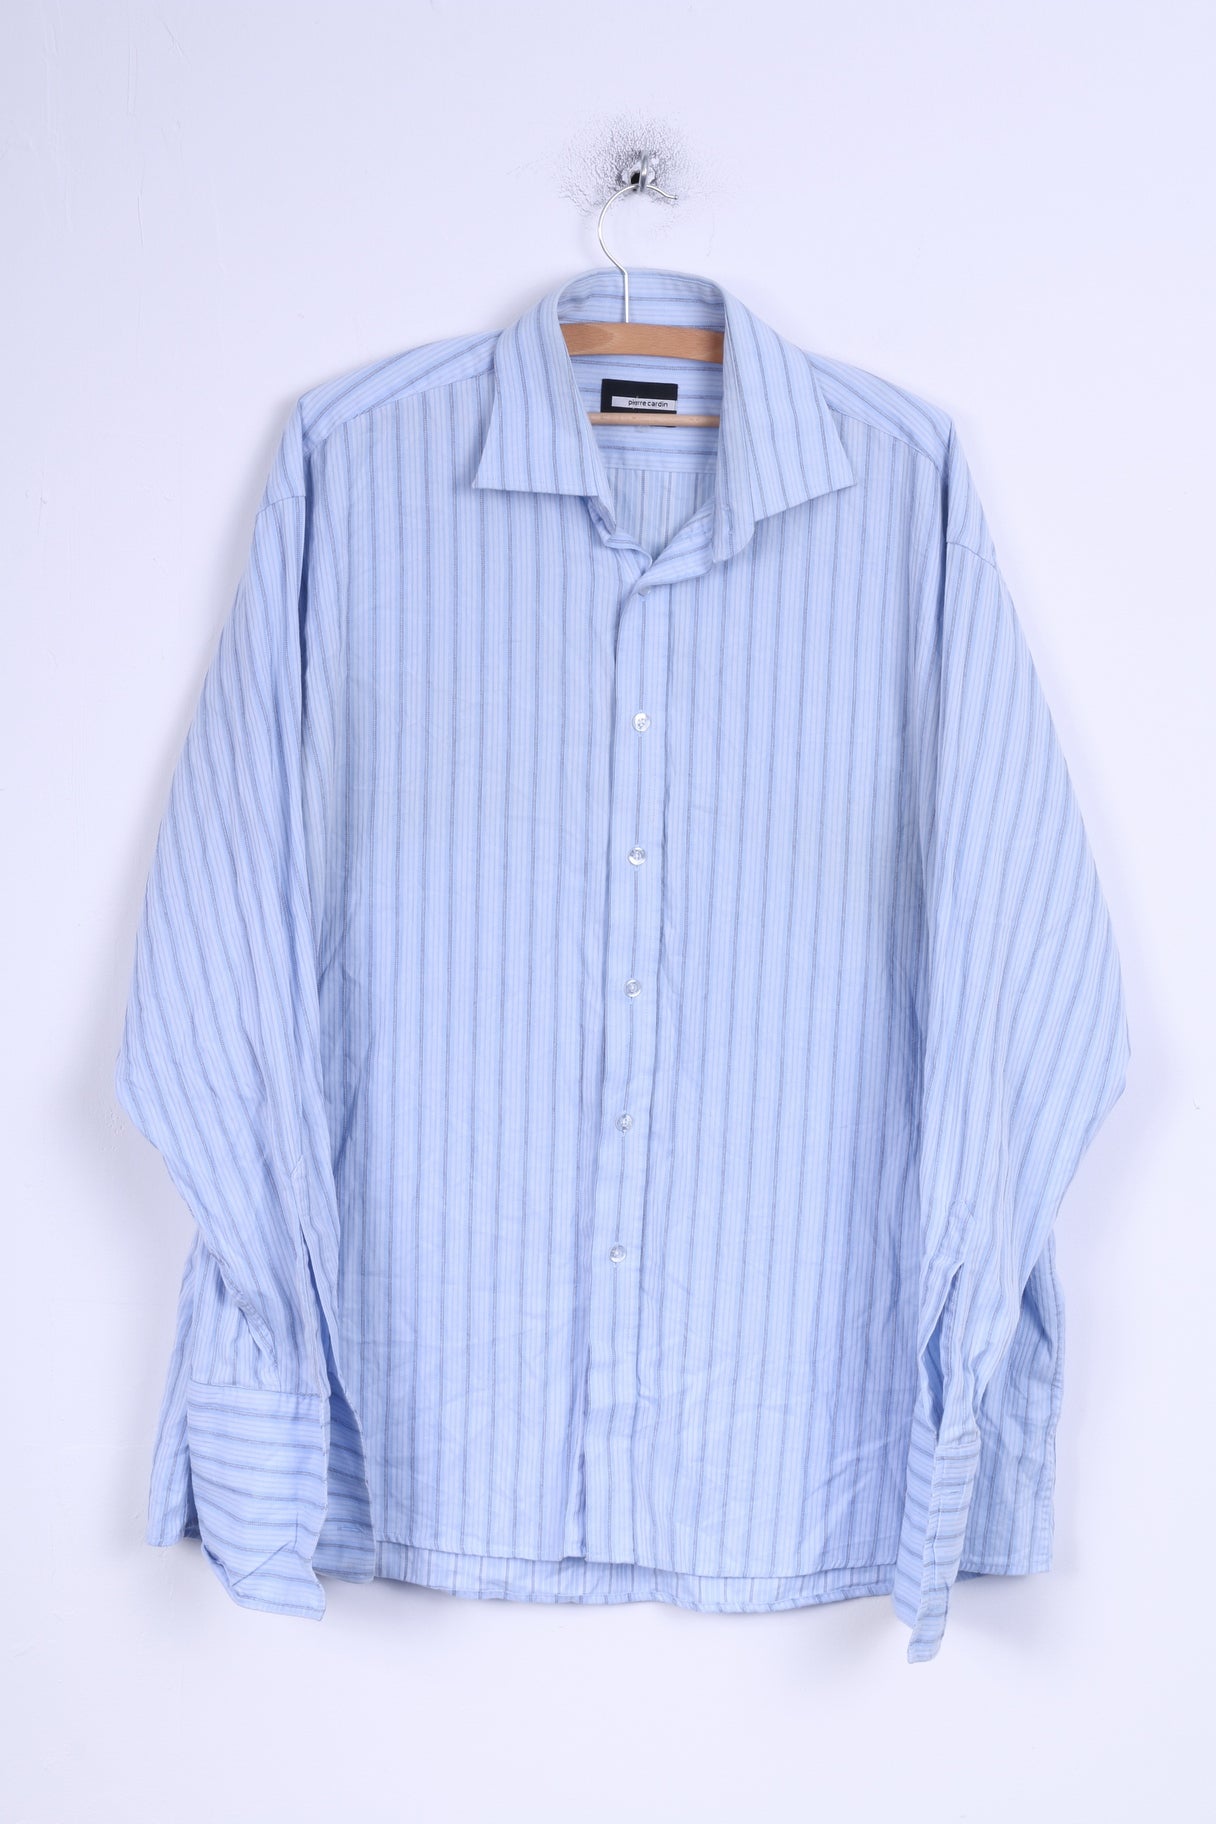 Pierre Cardin Mens 17 43 XL Casual Shirt Blue Cuffs Striped Cotton Detailed Buttons